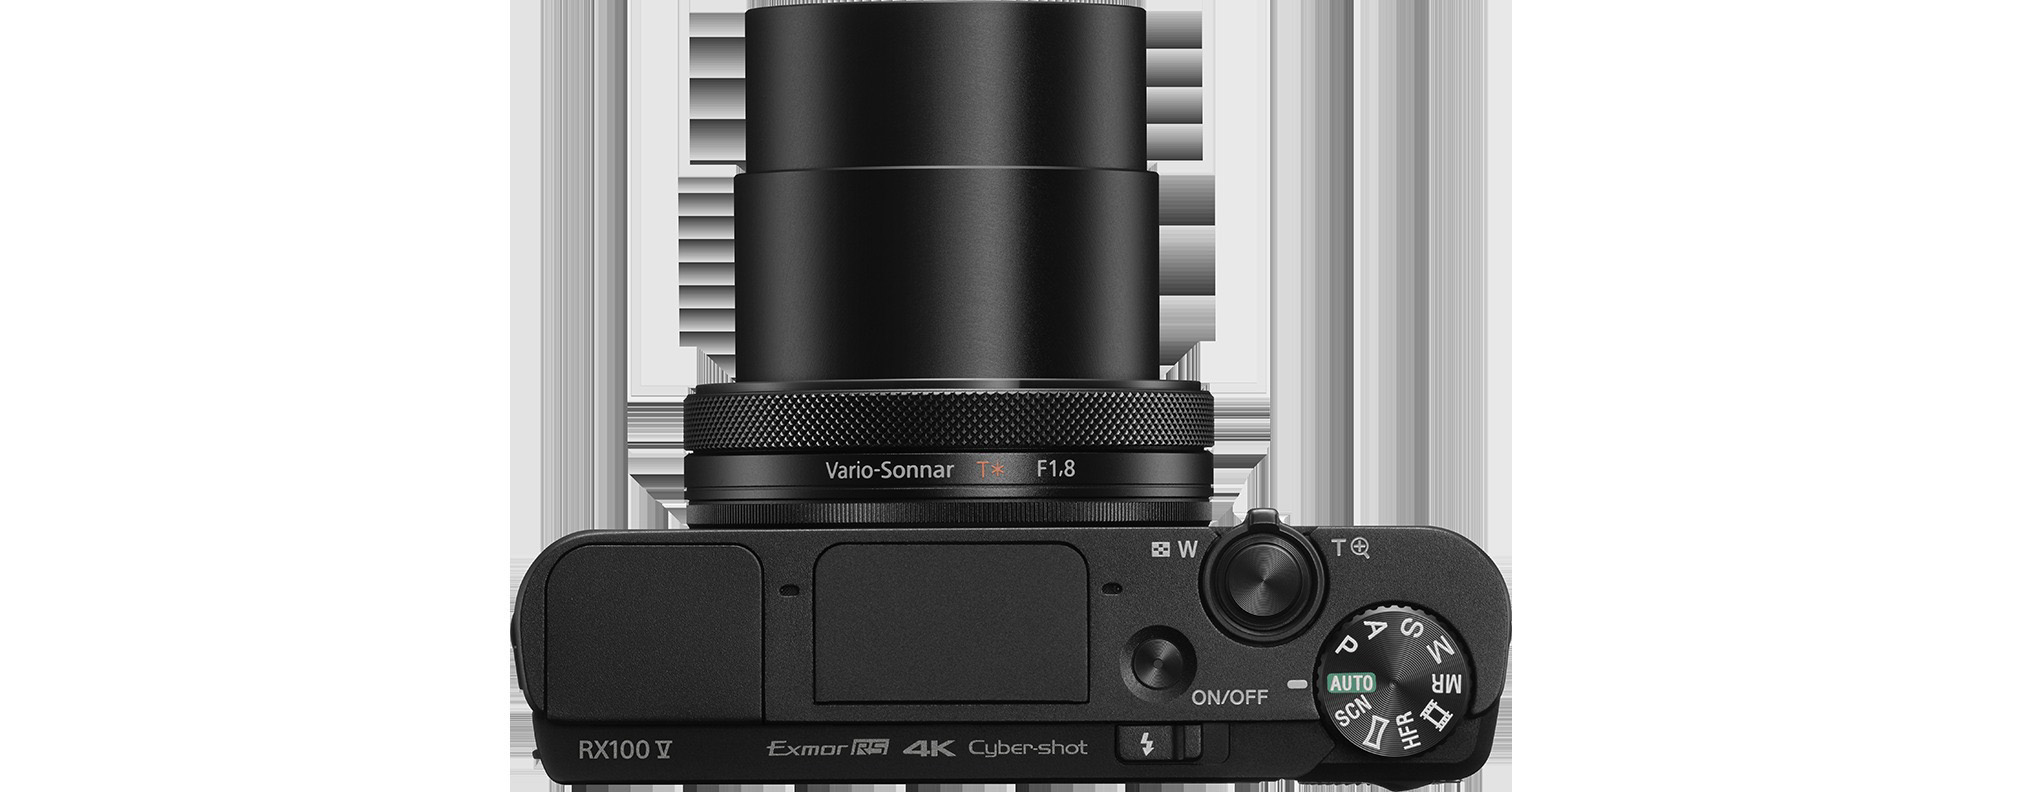 SONY Cyber-shot DSC-RX100 VA Zeiss NFC Xtra Digitalkamera opt. KIT Schwarz, Fine/TFT-LCD, , WLAN Zoom, 2.9x